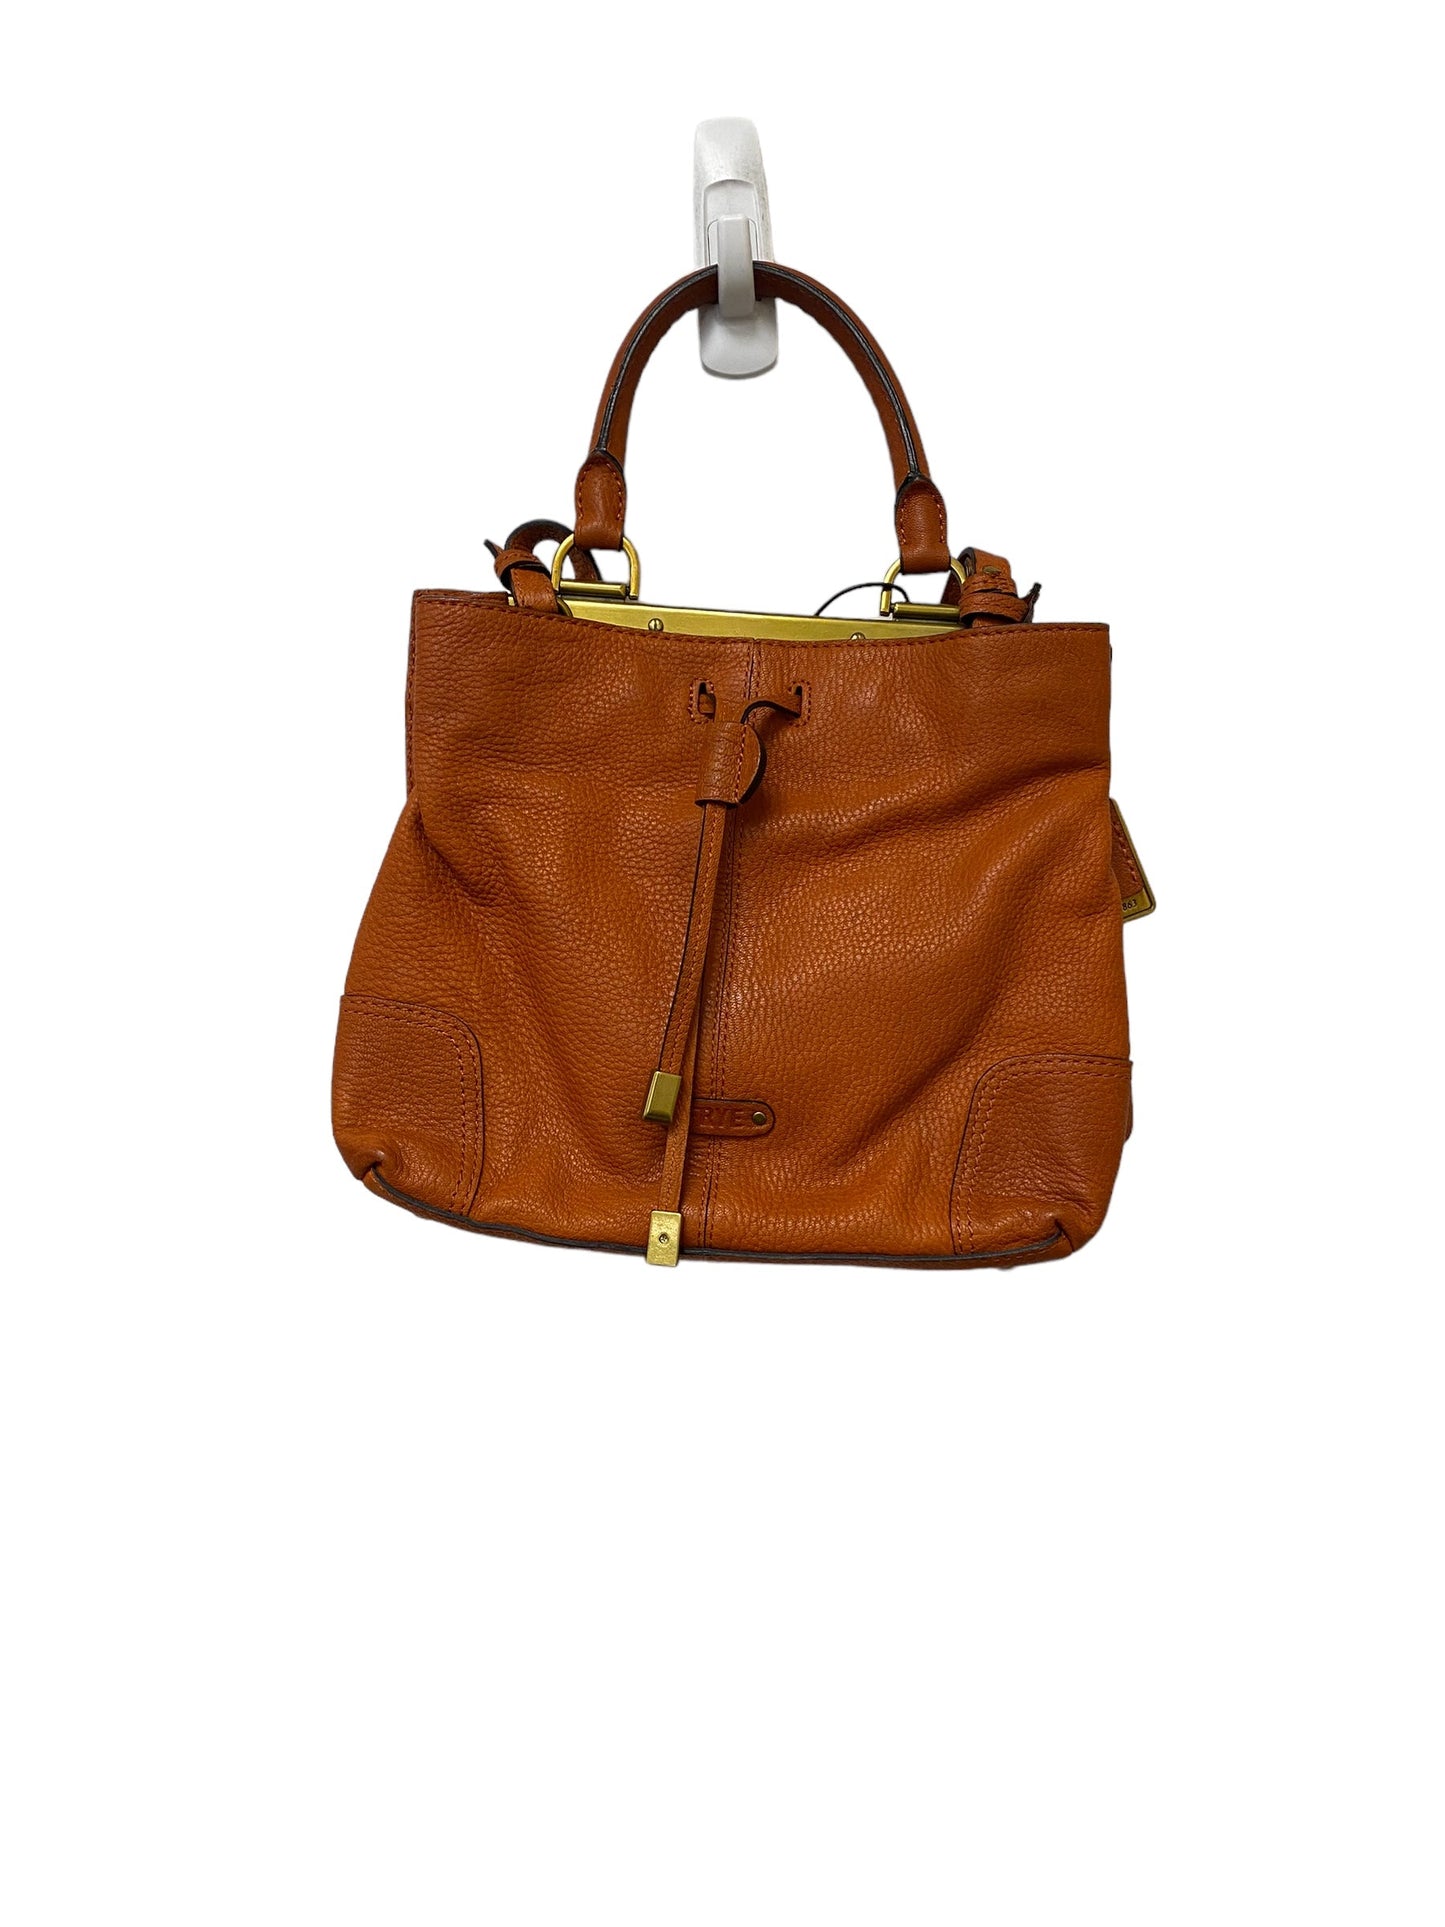 Handbag Designer By Frye  Size: Small